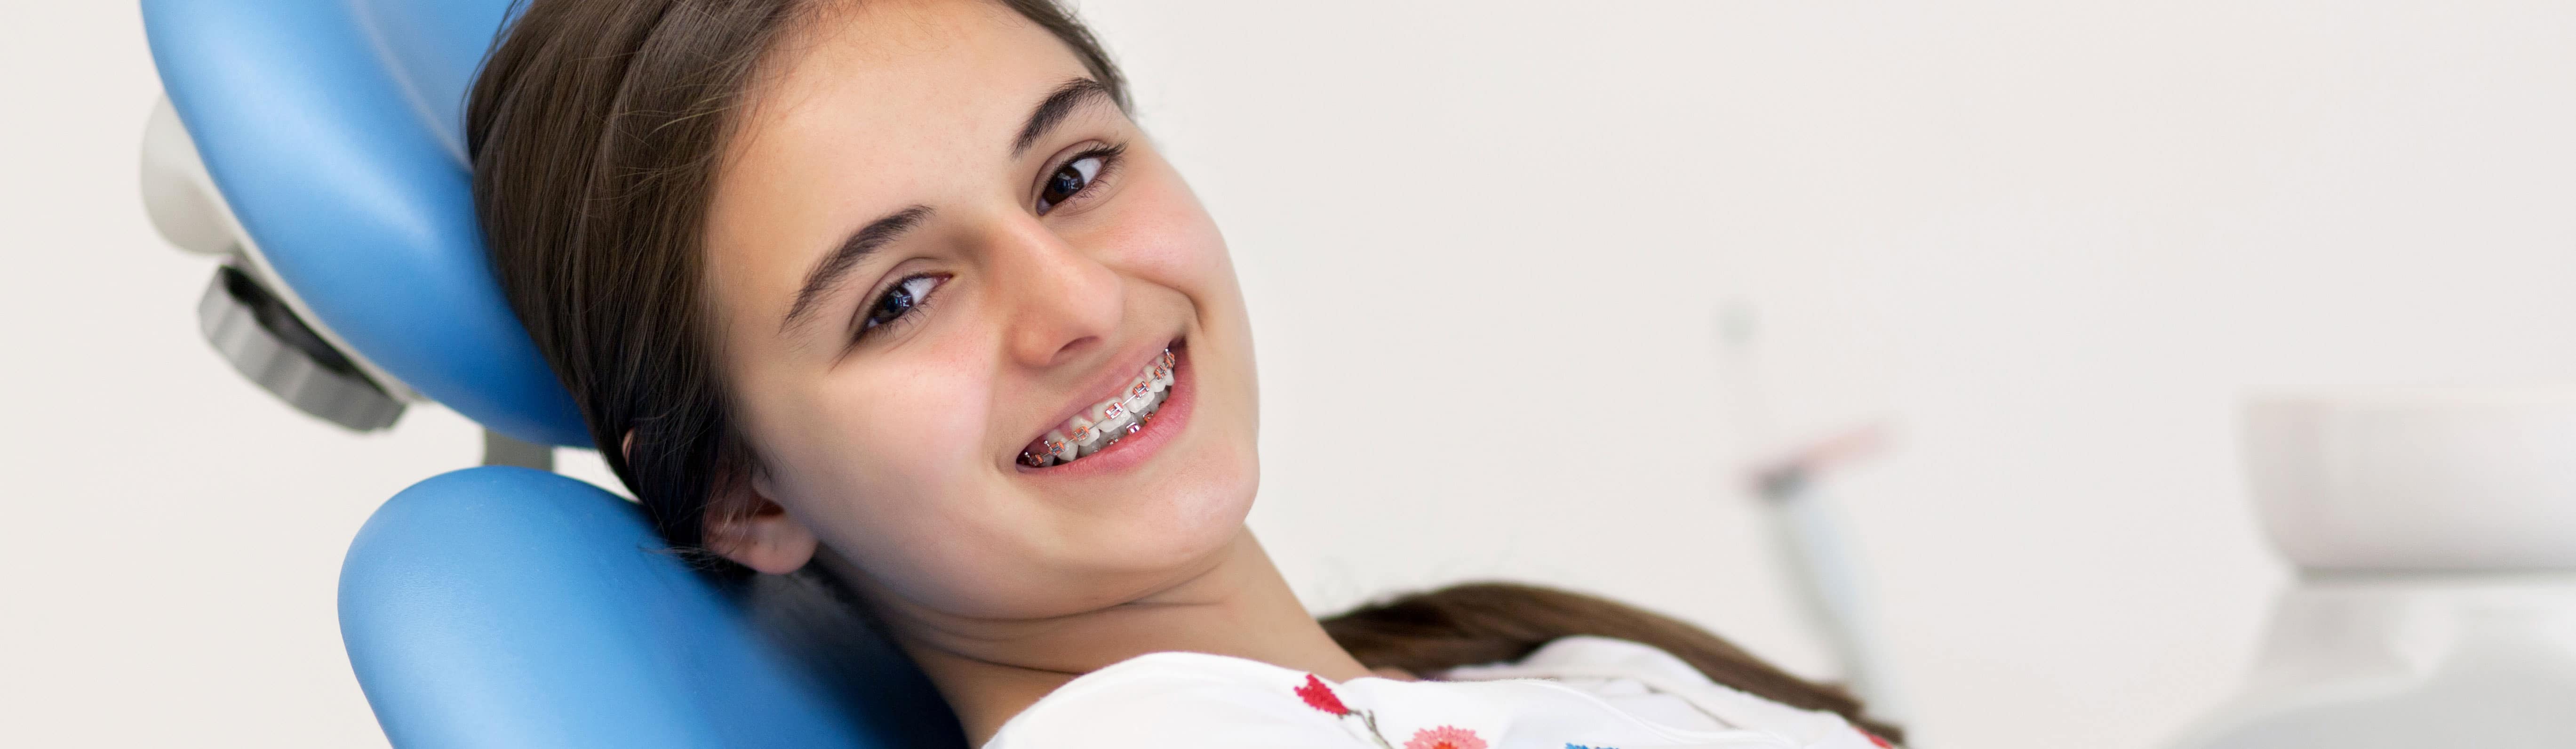 Orthodontics, braces for kids